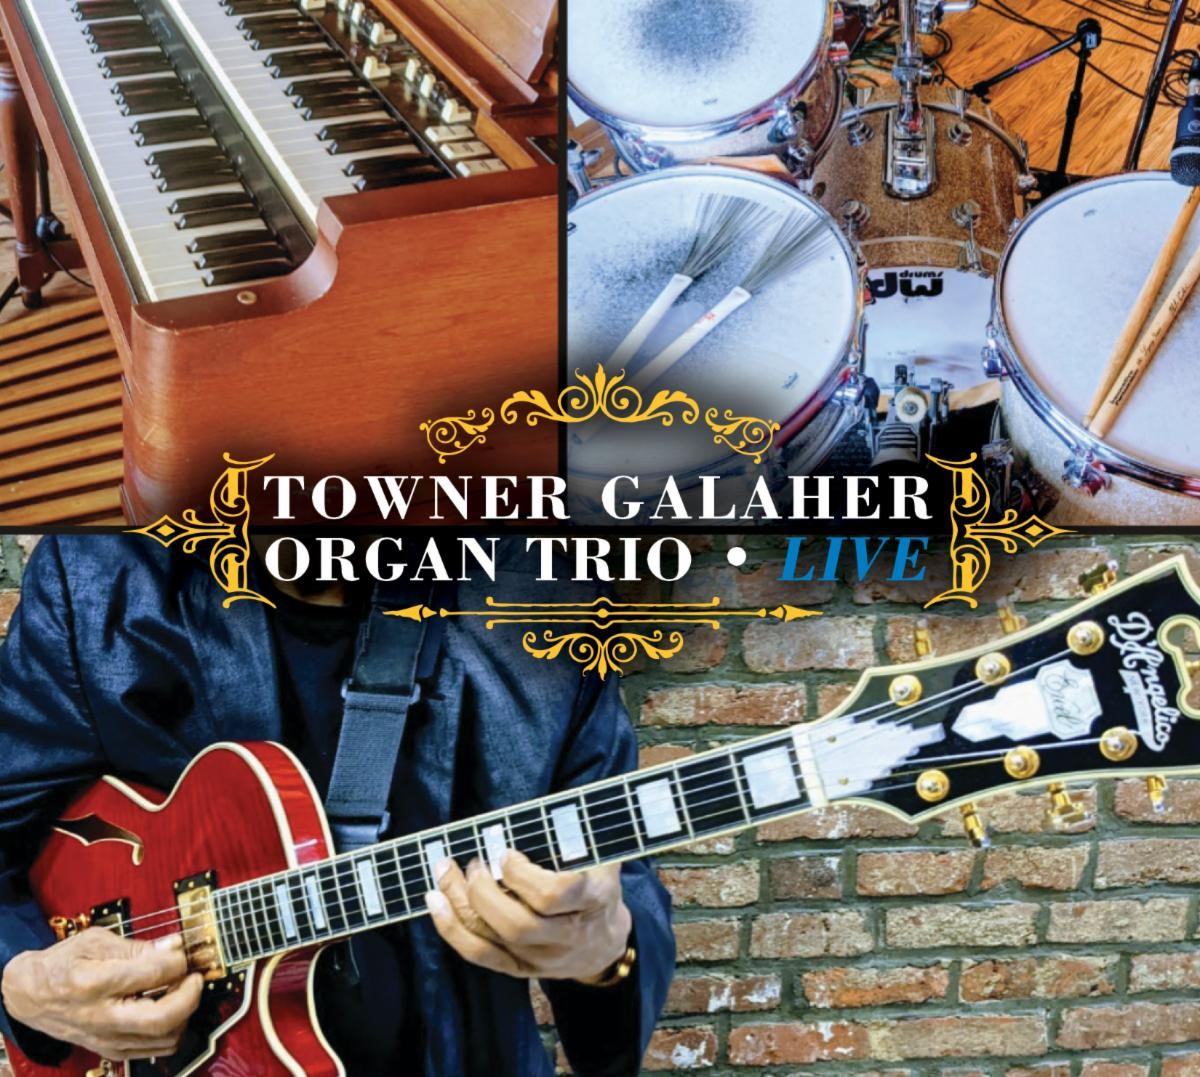 TOWNER GALAHER - Towner Galaher Organ Trio Live cover 